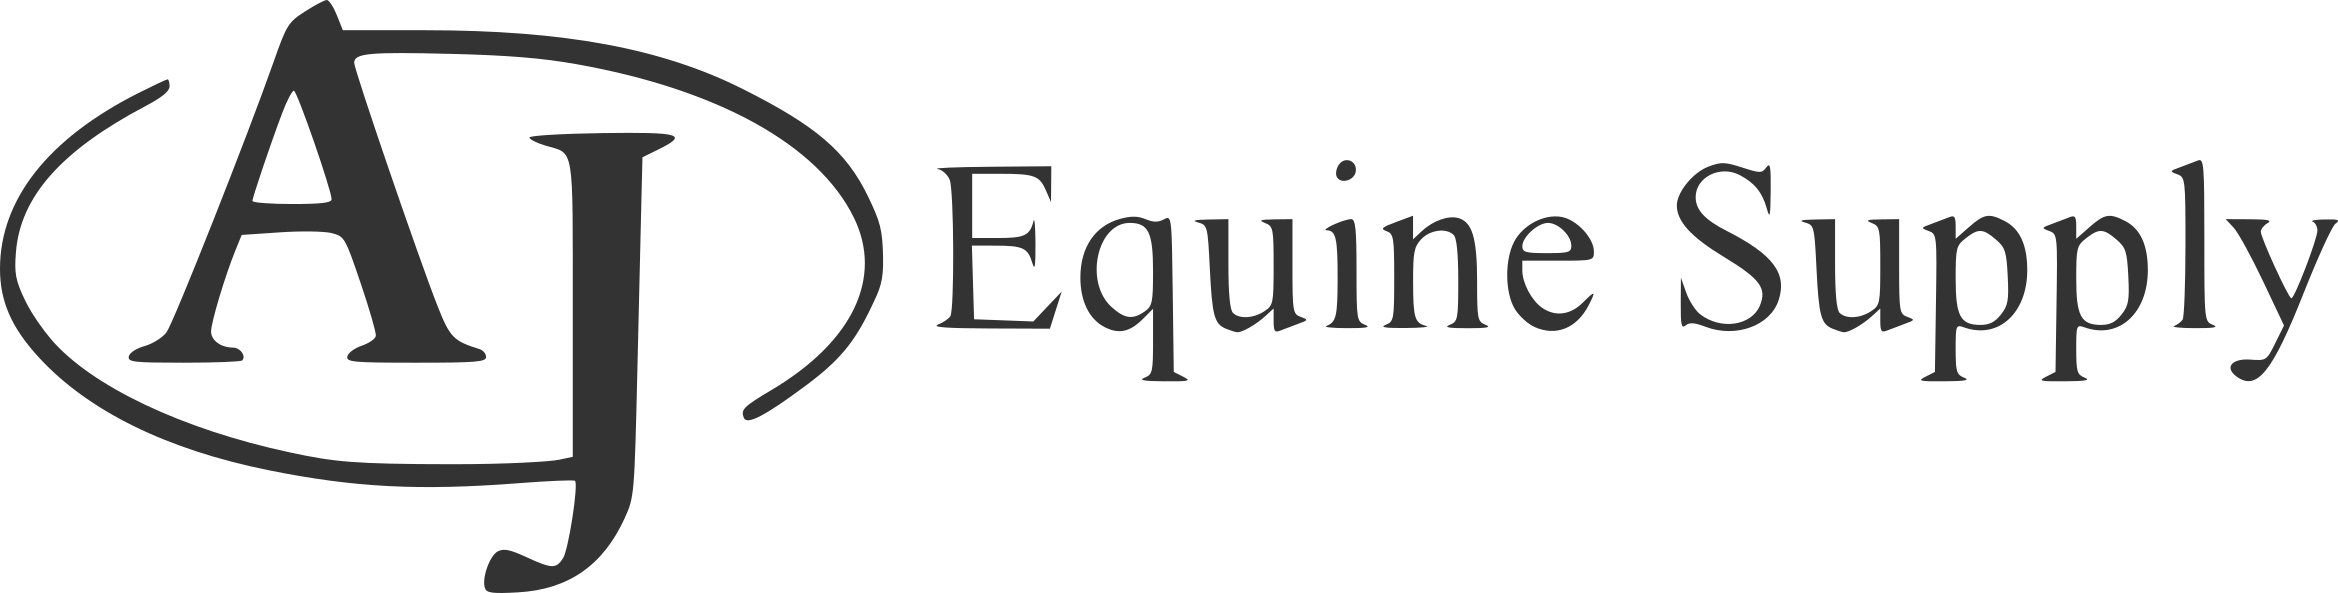 AJ Equine Supply (002).png